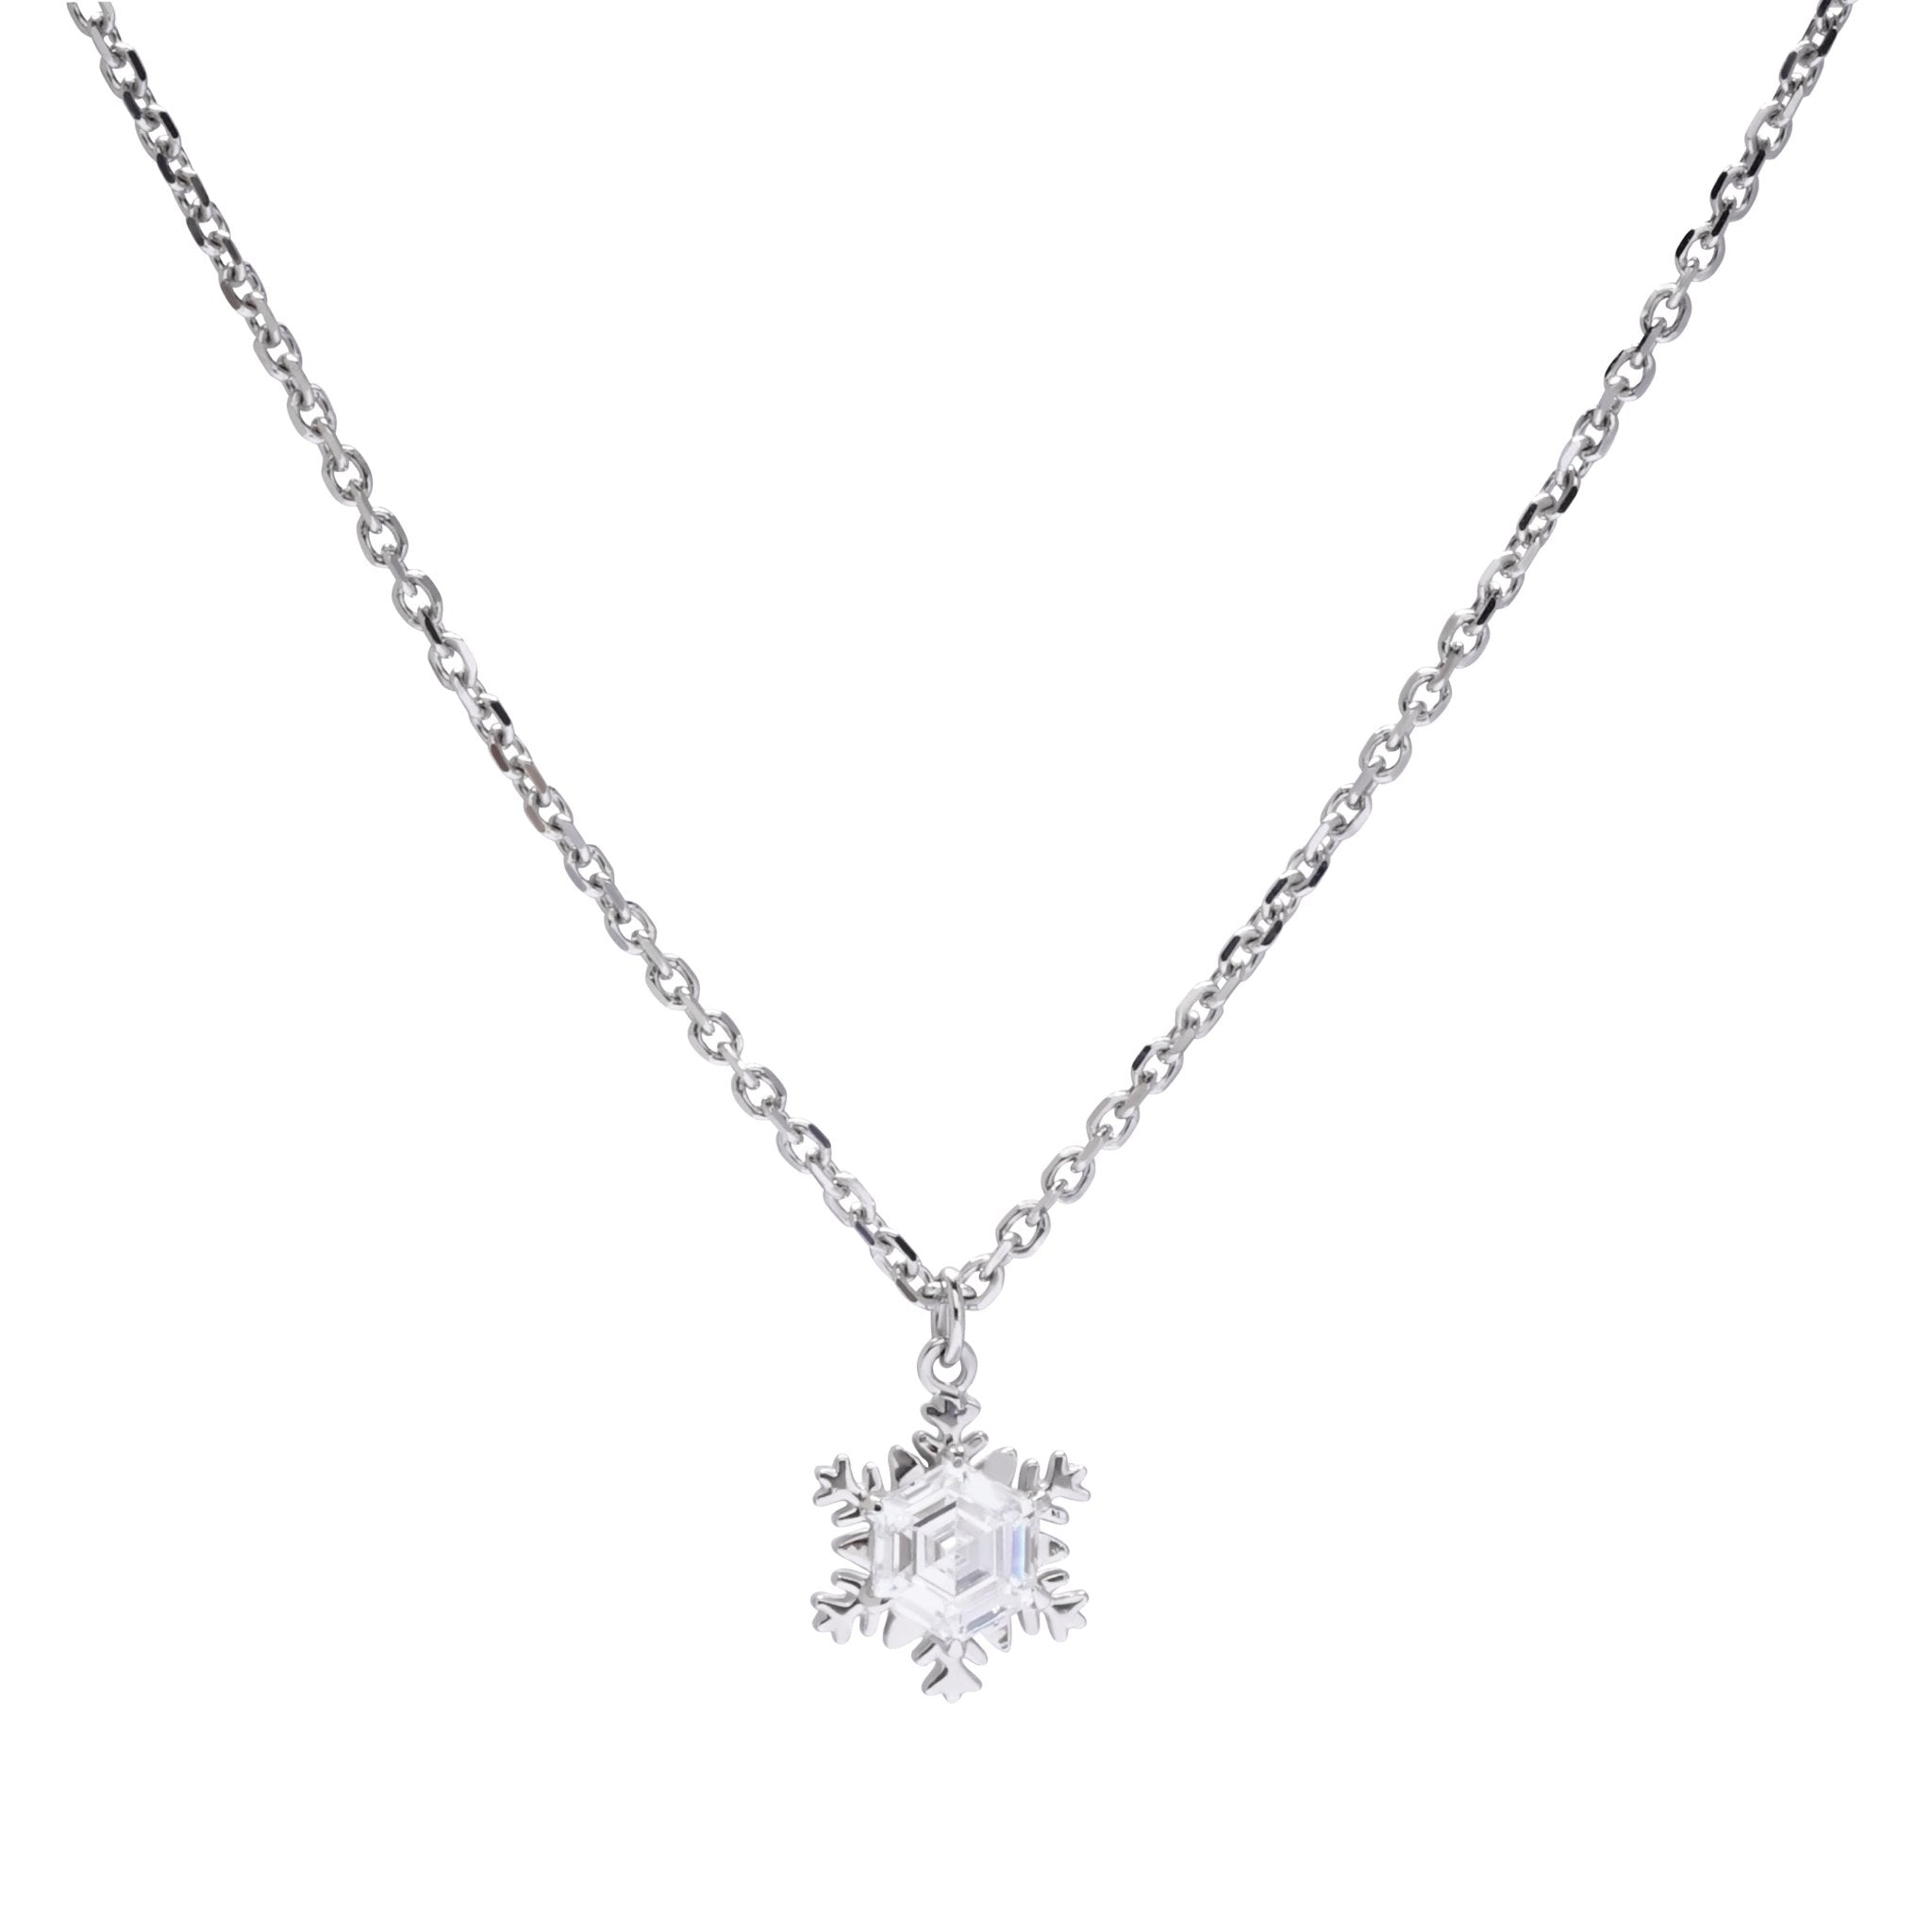 Snow Gold Necklace - Sparkle & Joy - Juene Jewelry